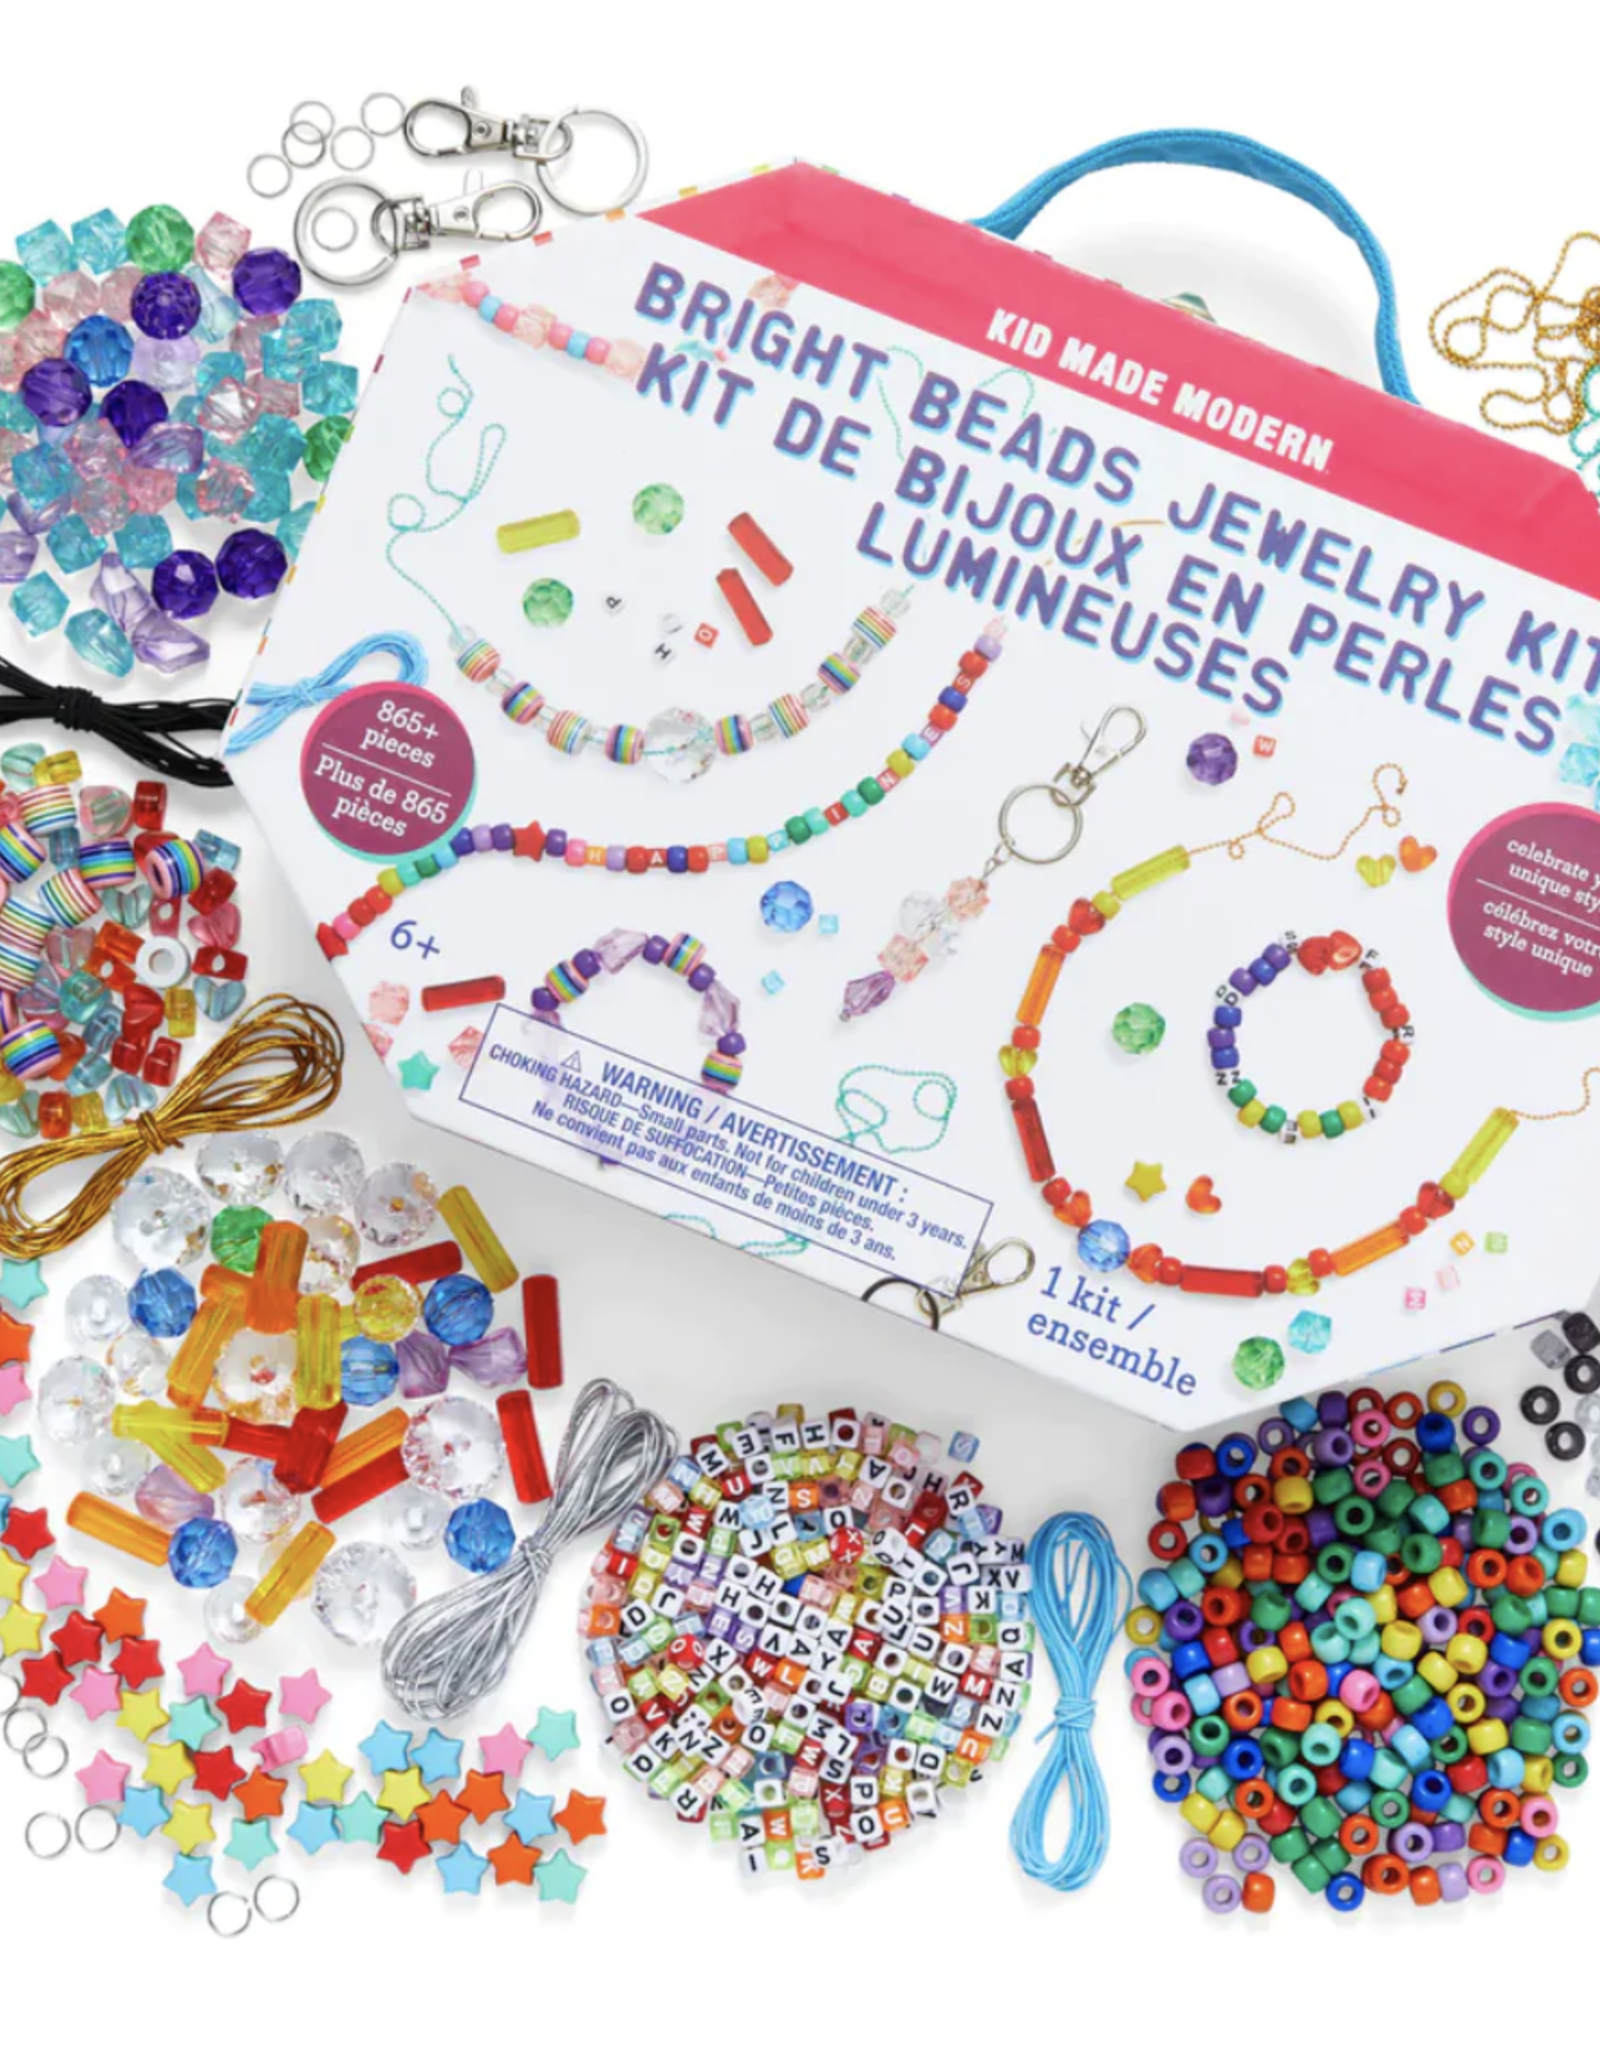 Kid Made Modern bright beads jewelry kit